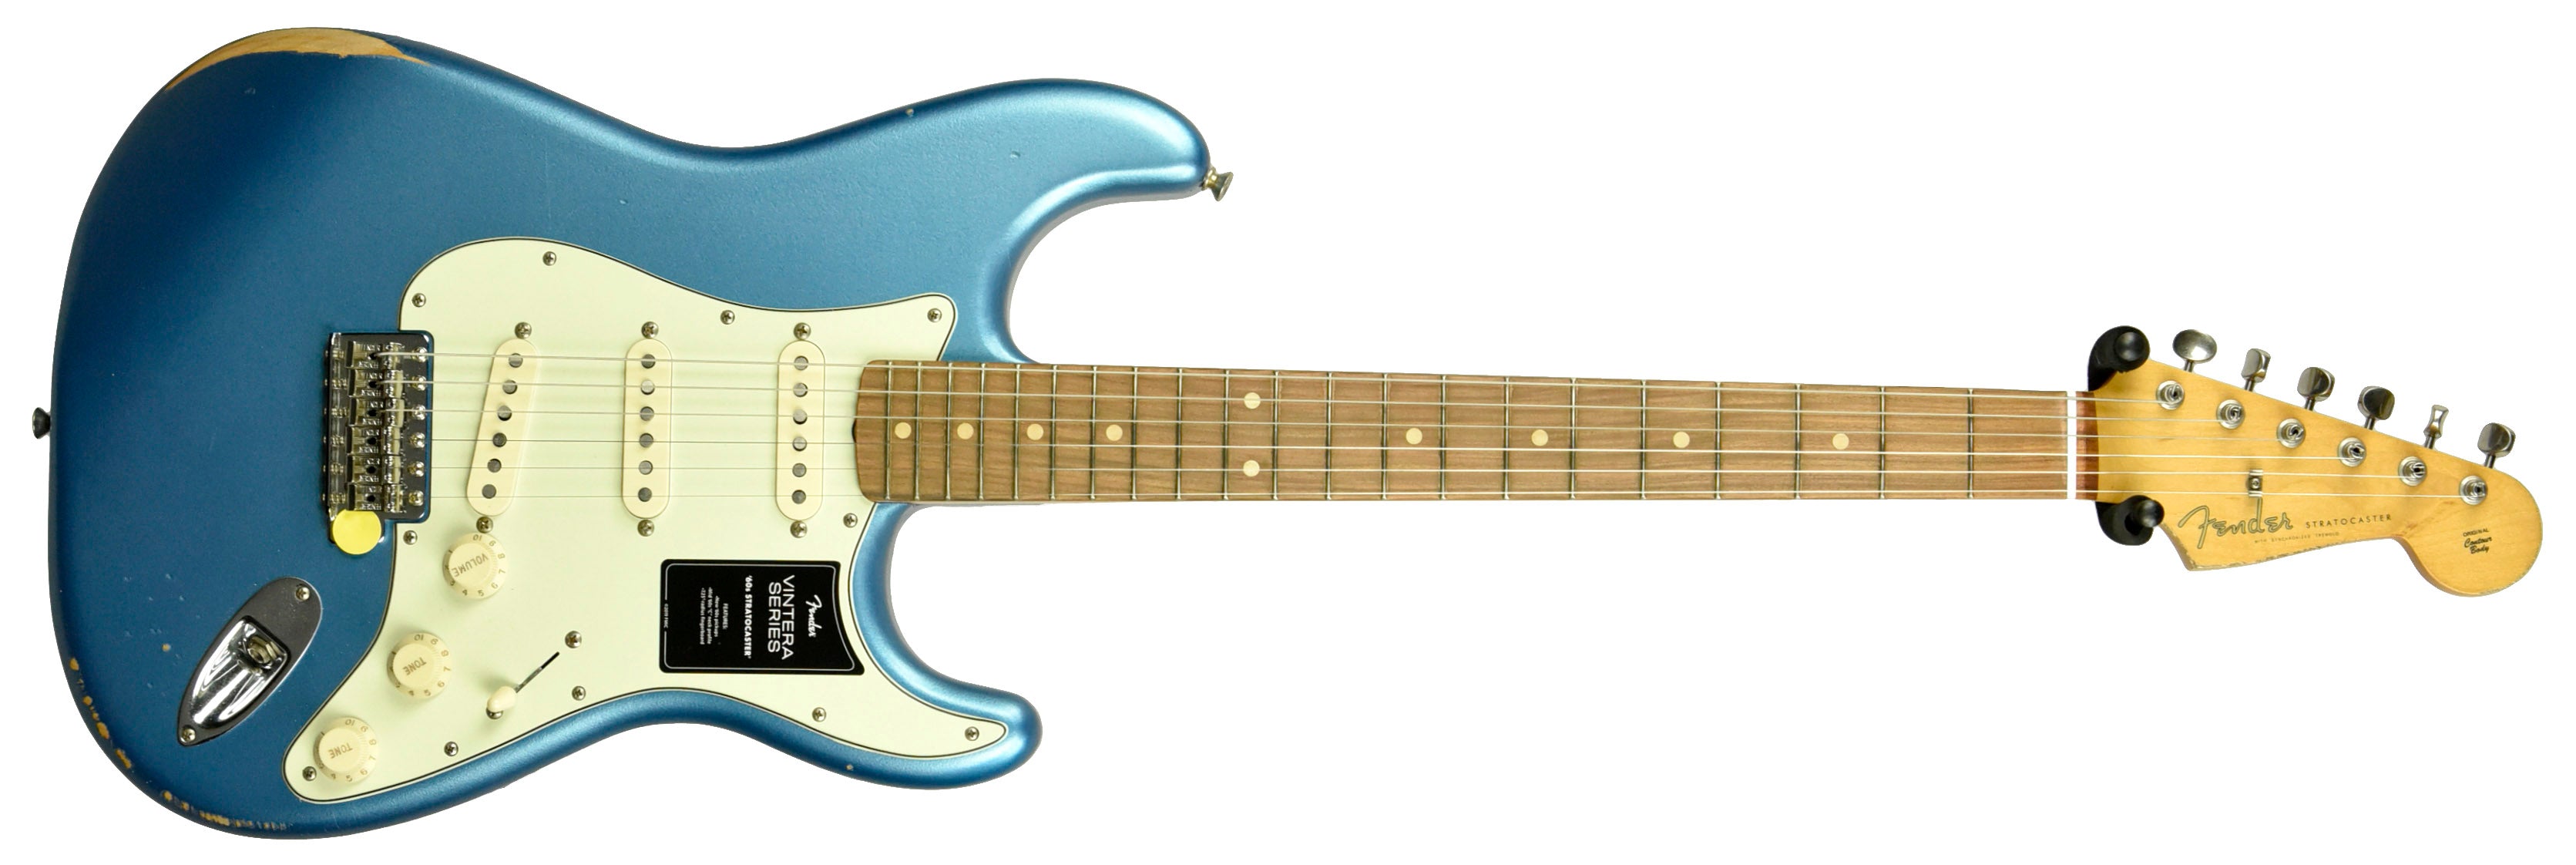 Used Fender Vintera Road Worn 60s Stratocaster in Lake Placid Blue 